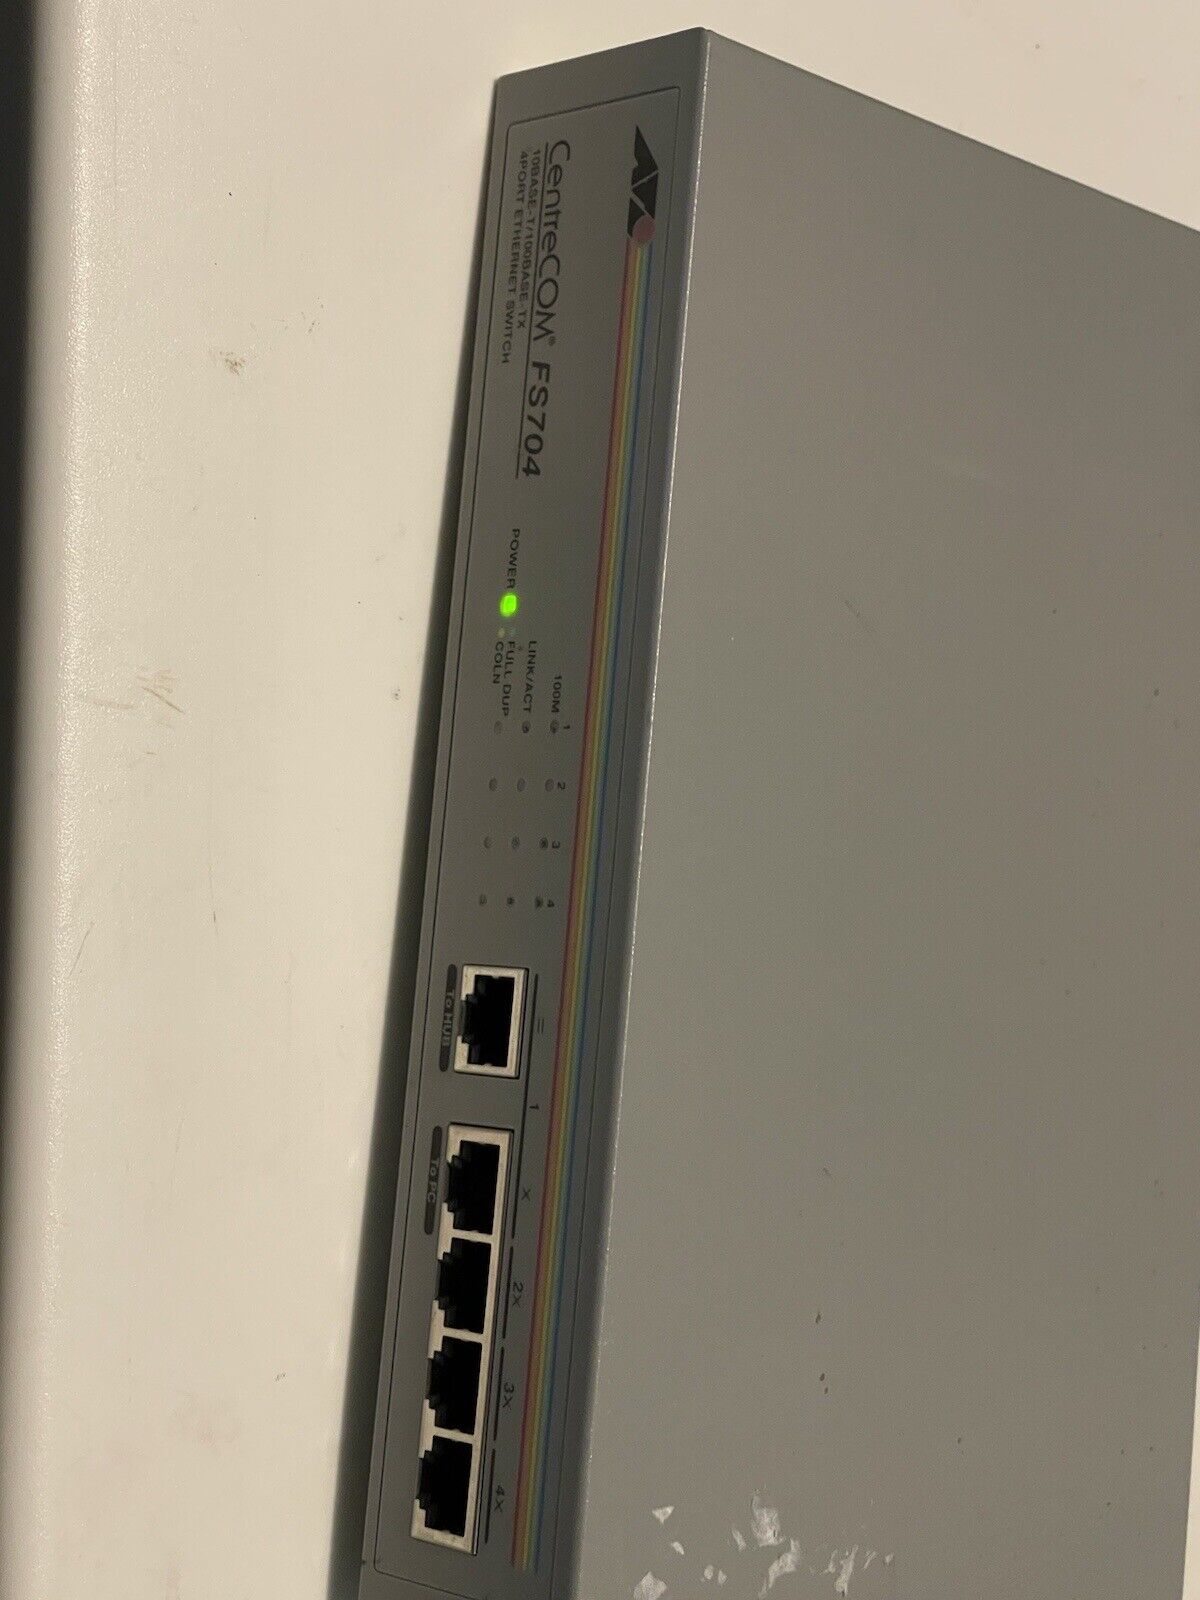 Allied Telesyn CentreCom FS704 10 Base-T 100 Base-TX 4 Port Ethernet Switch